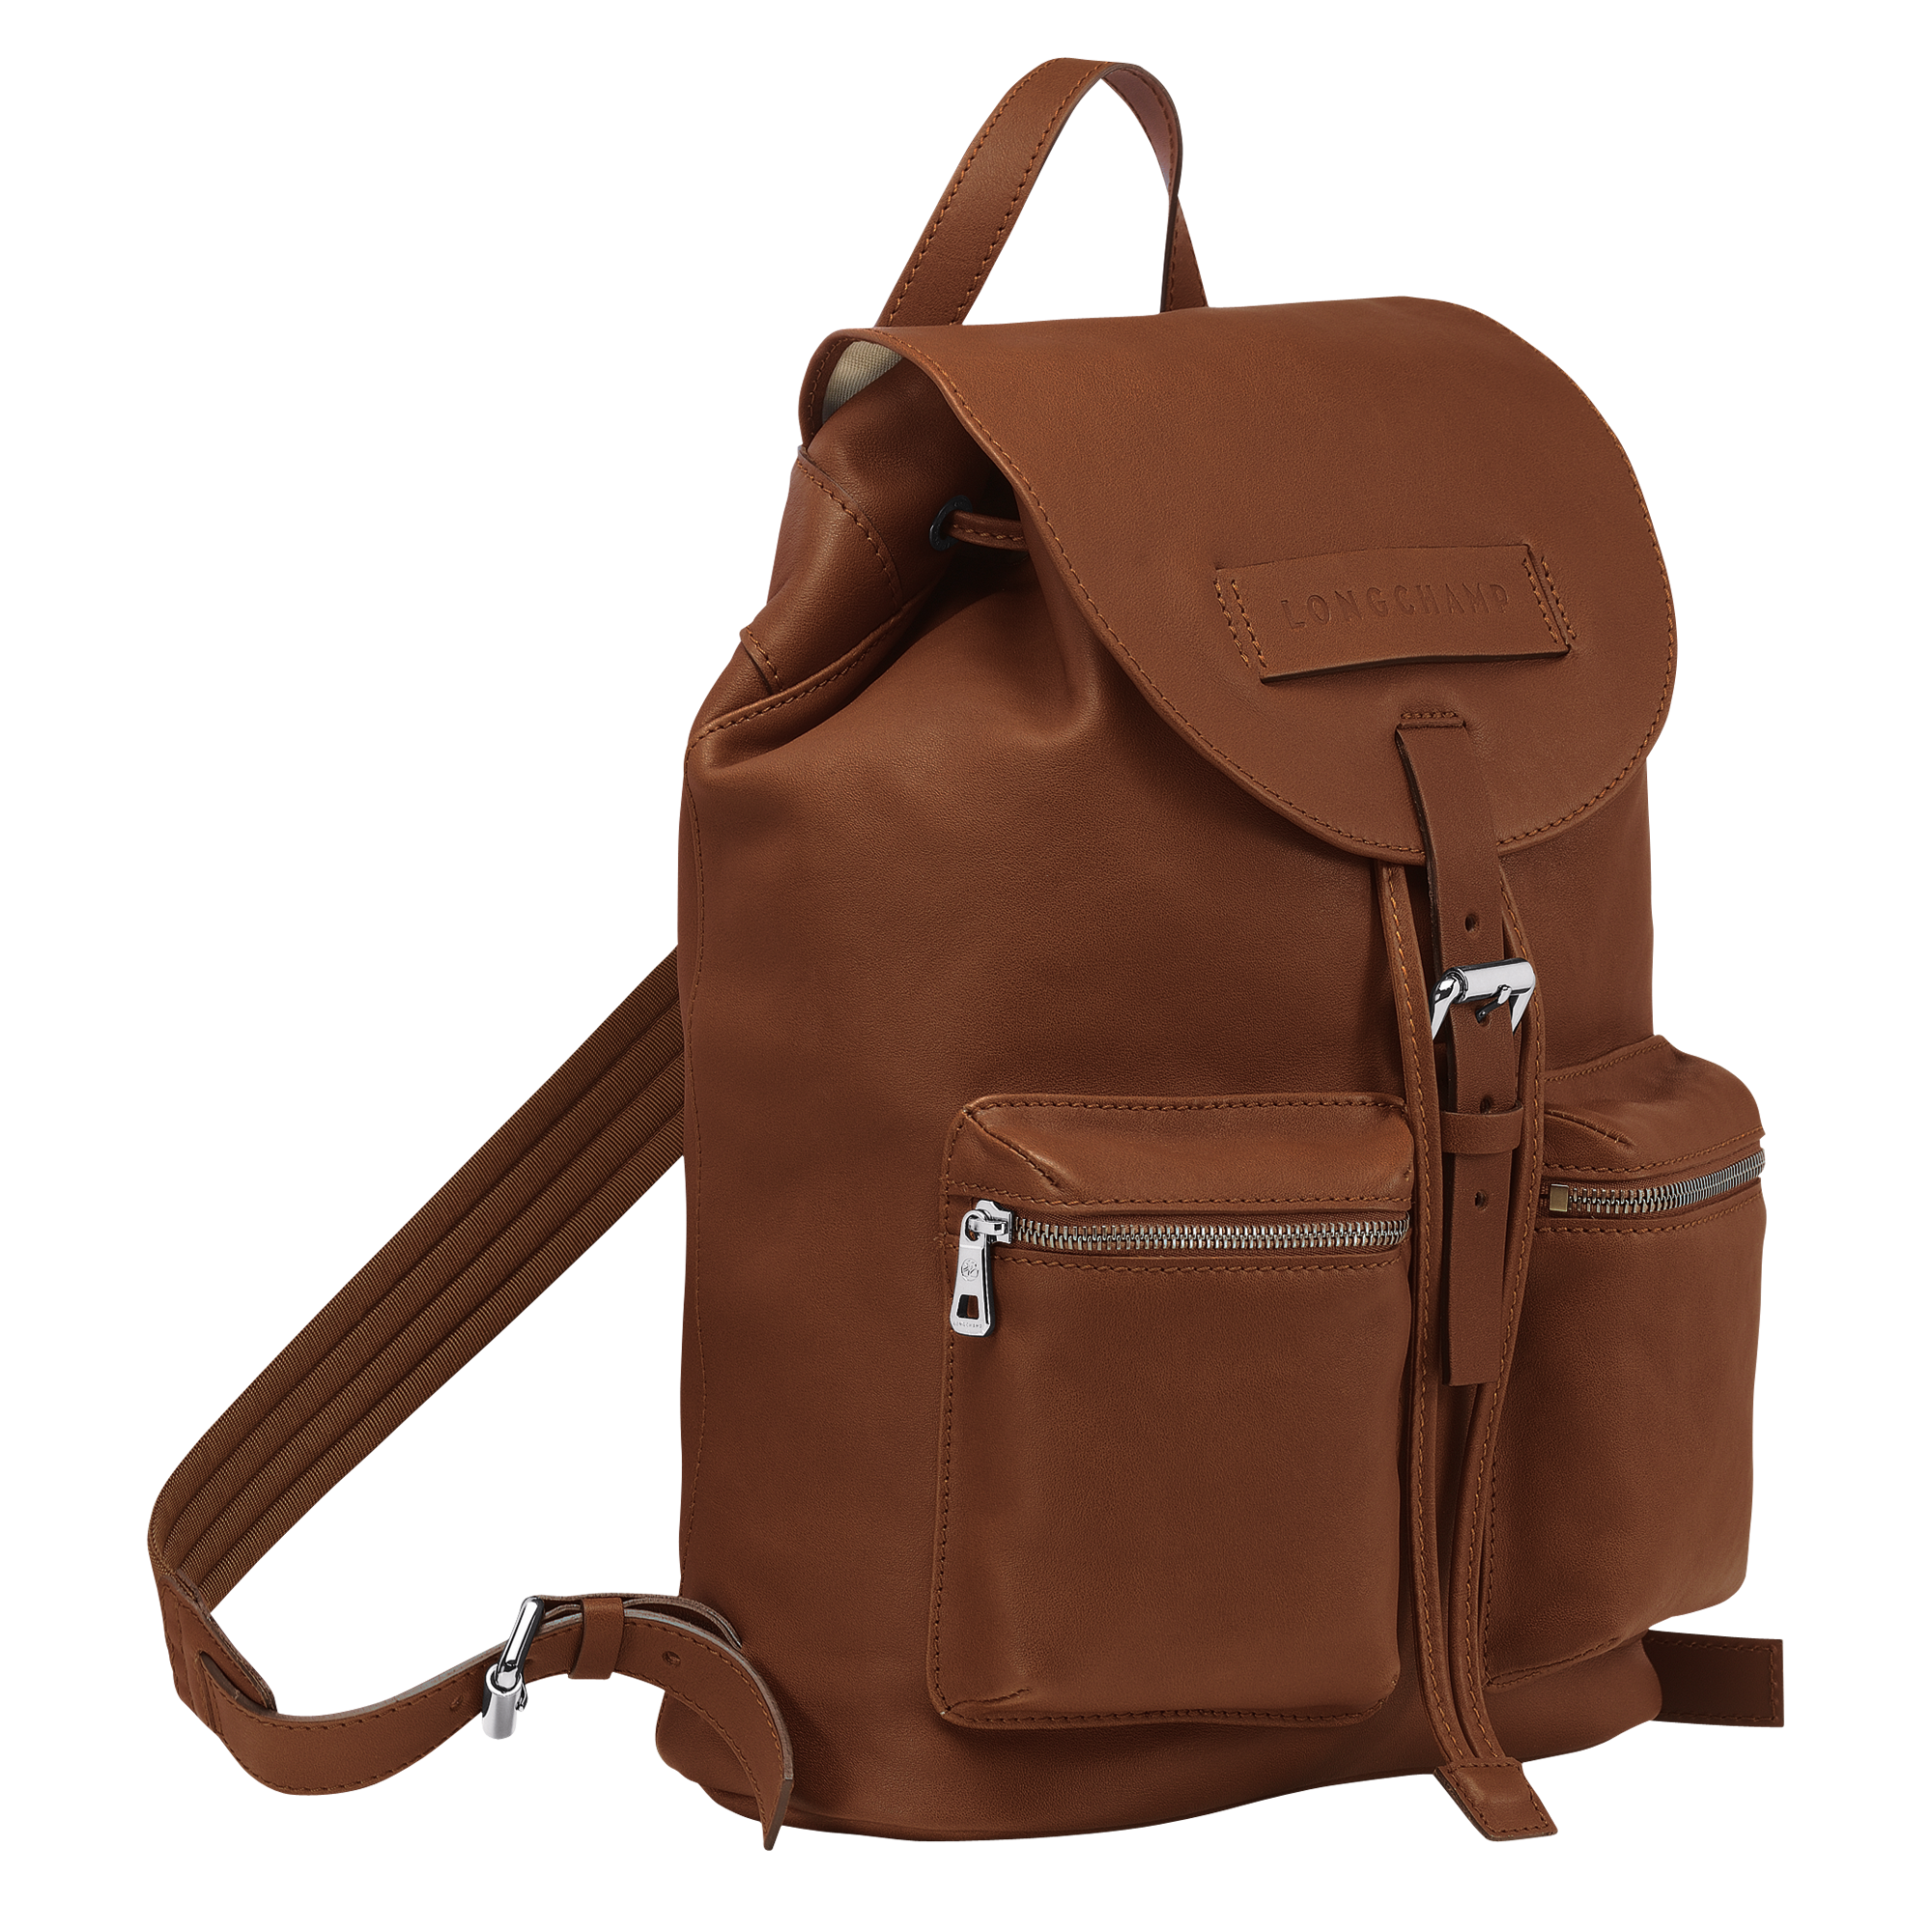 longchamp 3d backpack